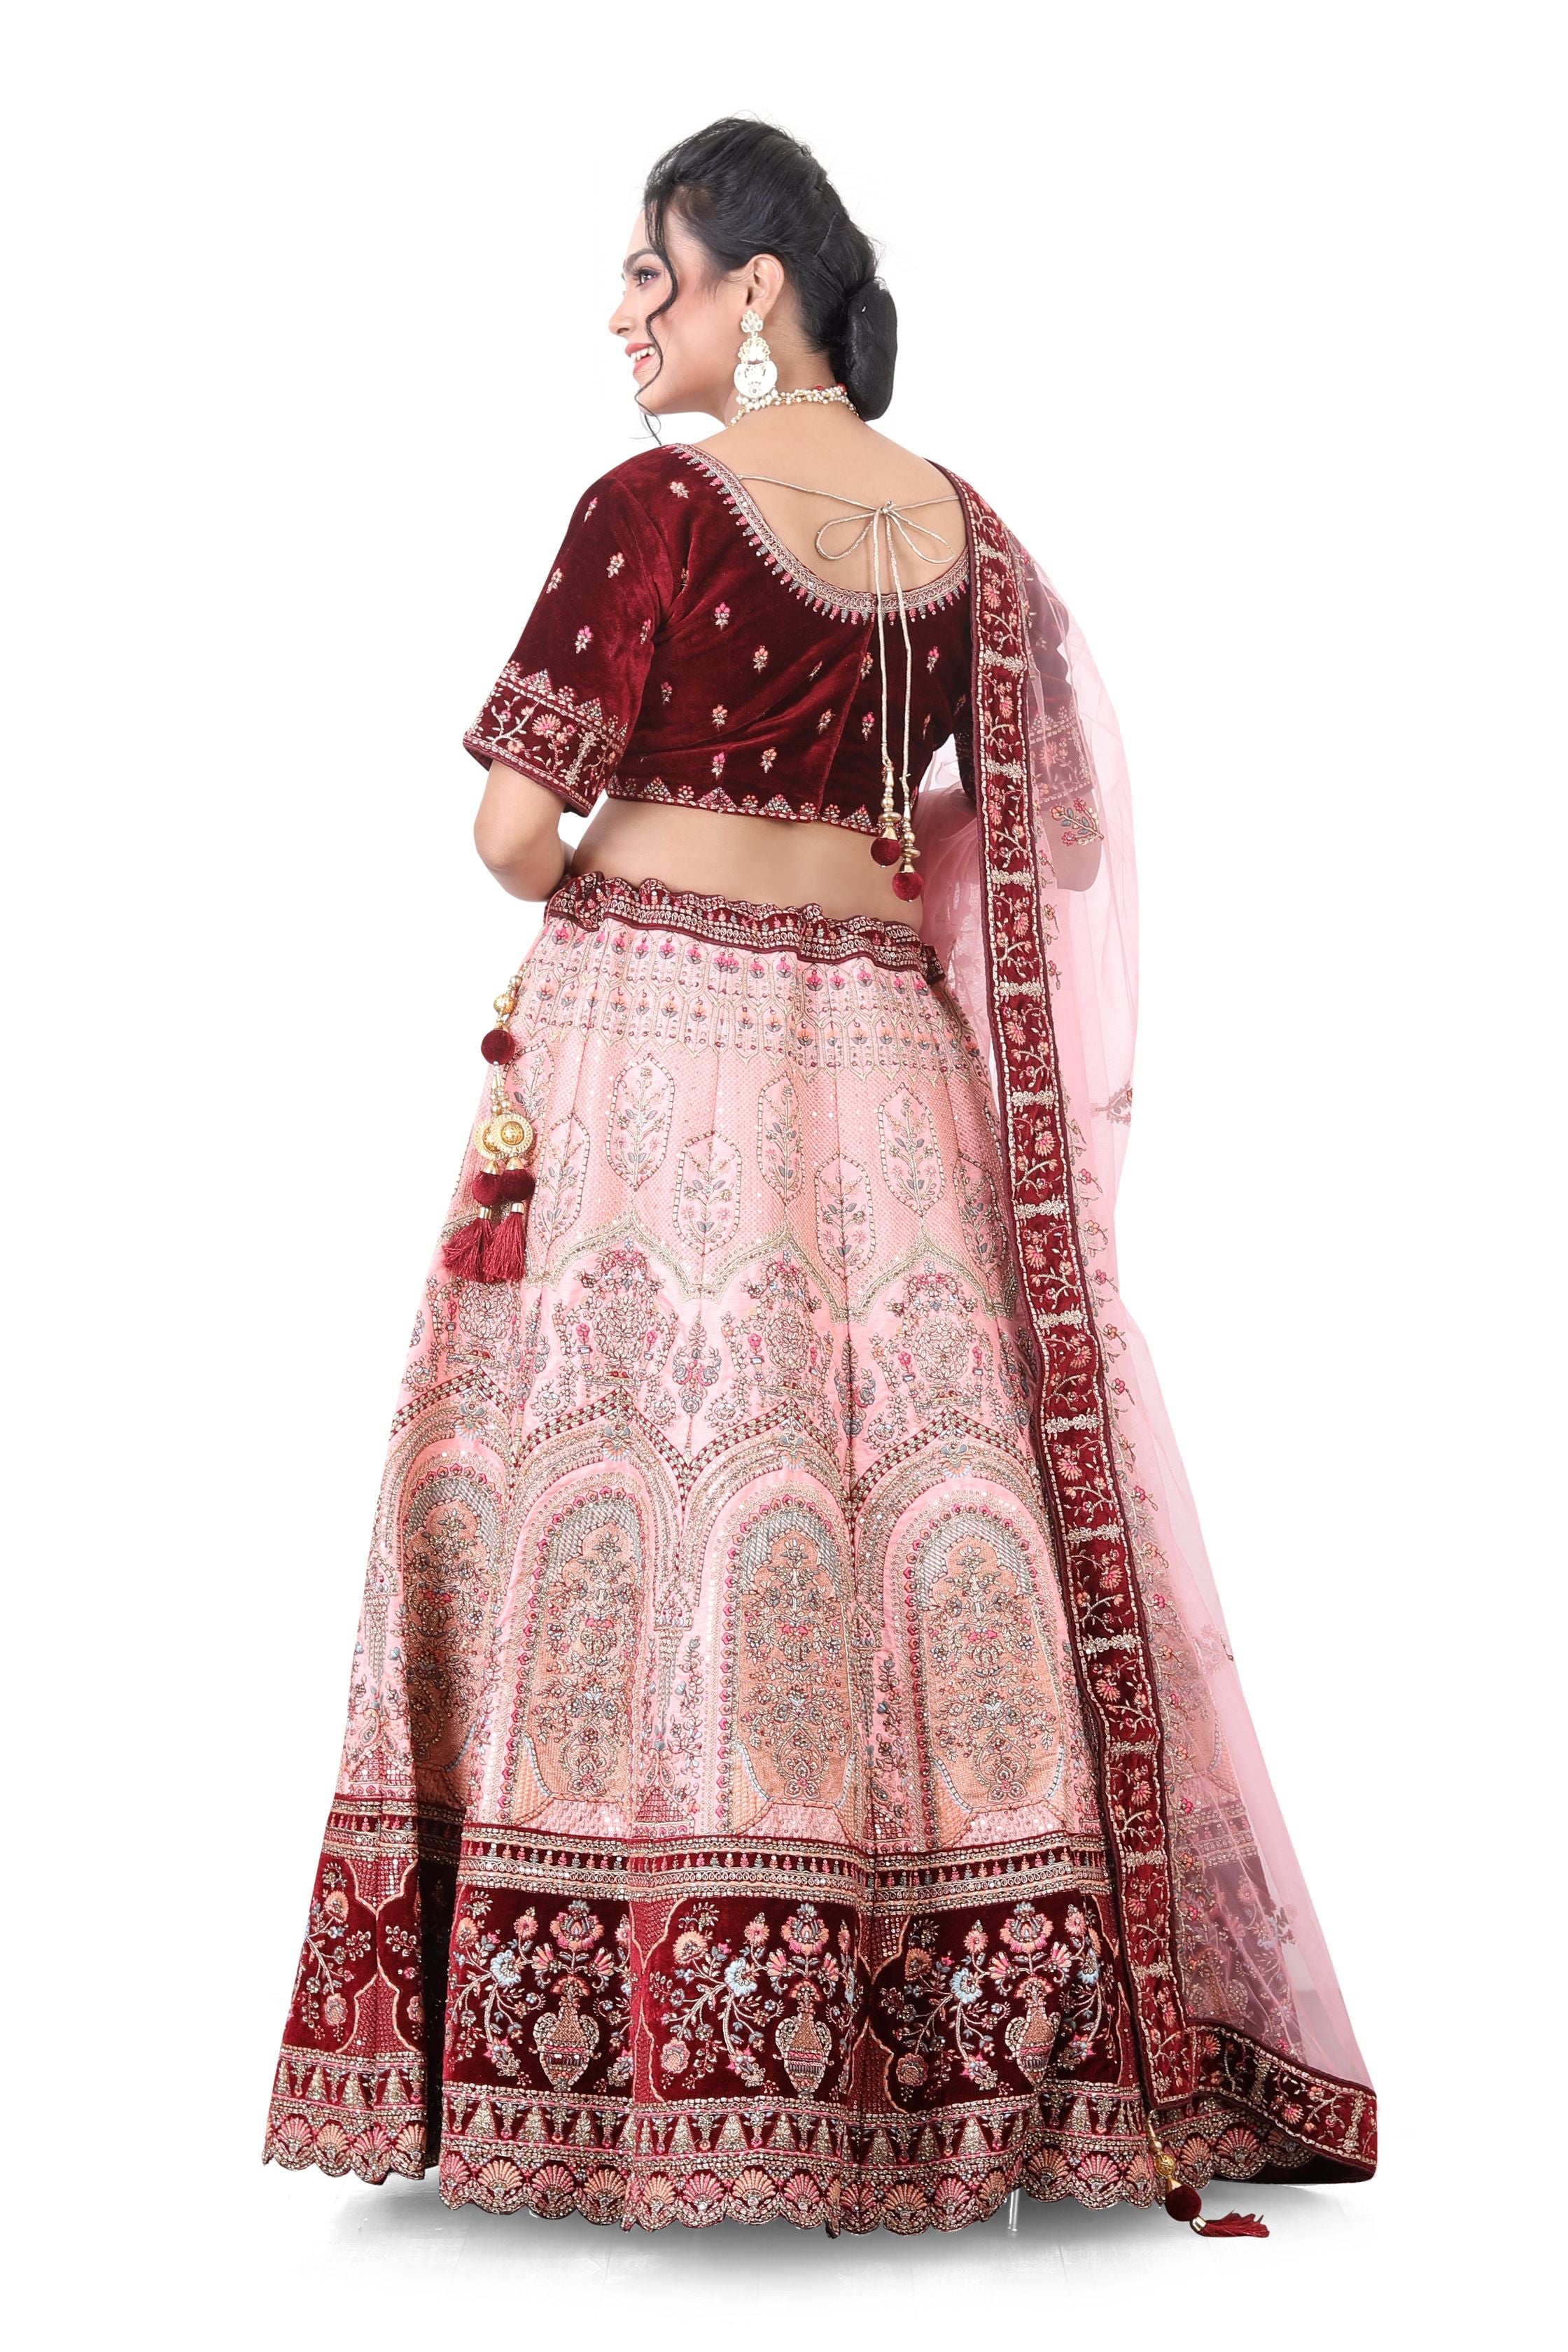 Pink Bridal Lehenga Choli - Premium Partywear Lehenga from Dulhan Exclusives - Just $985! Shop now at Dulhan Exclusives